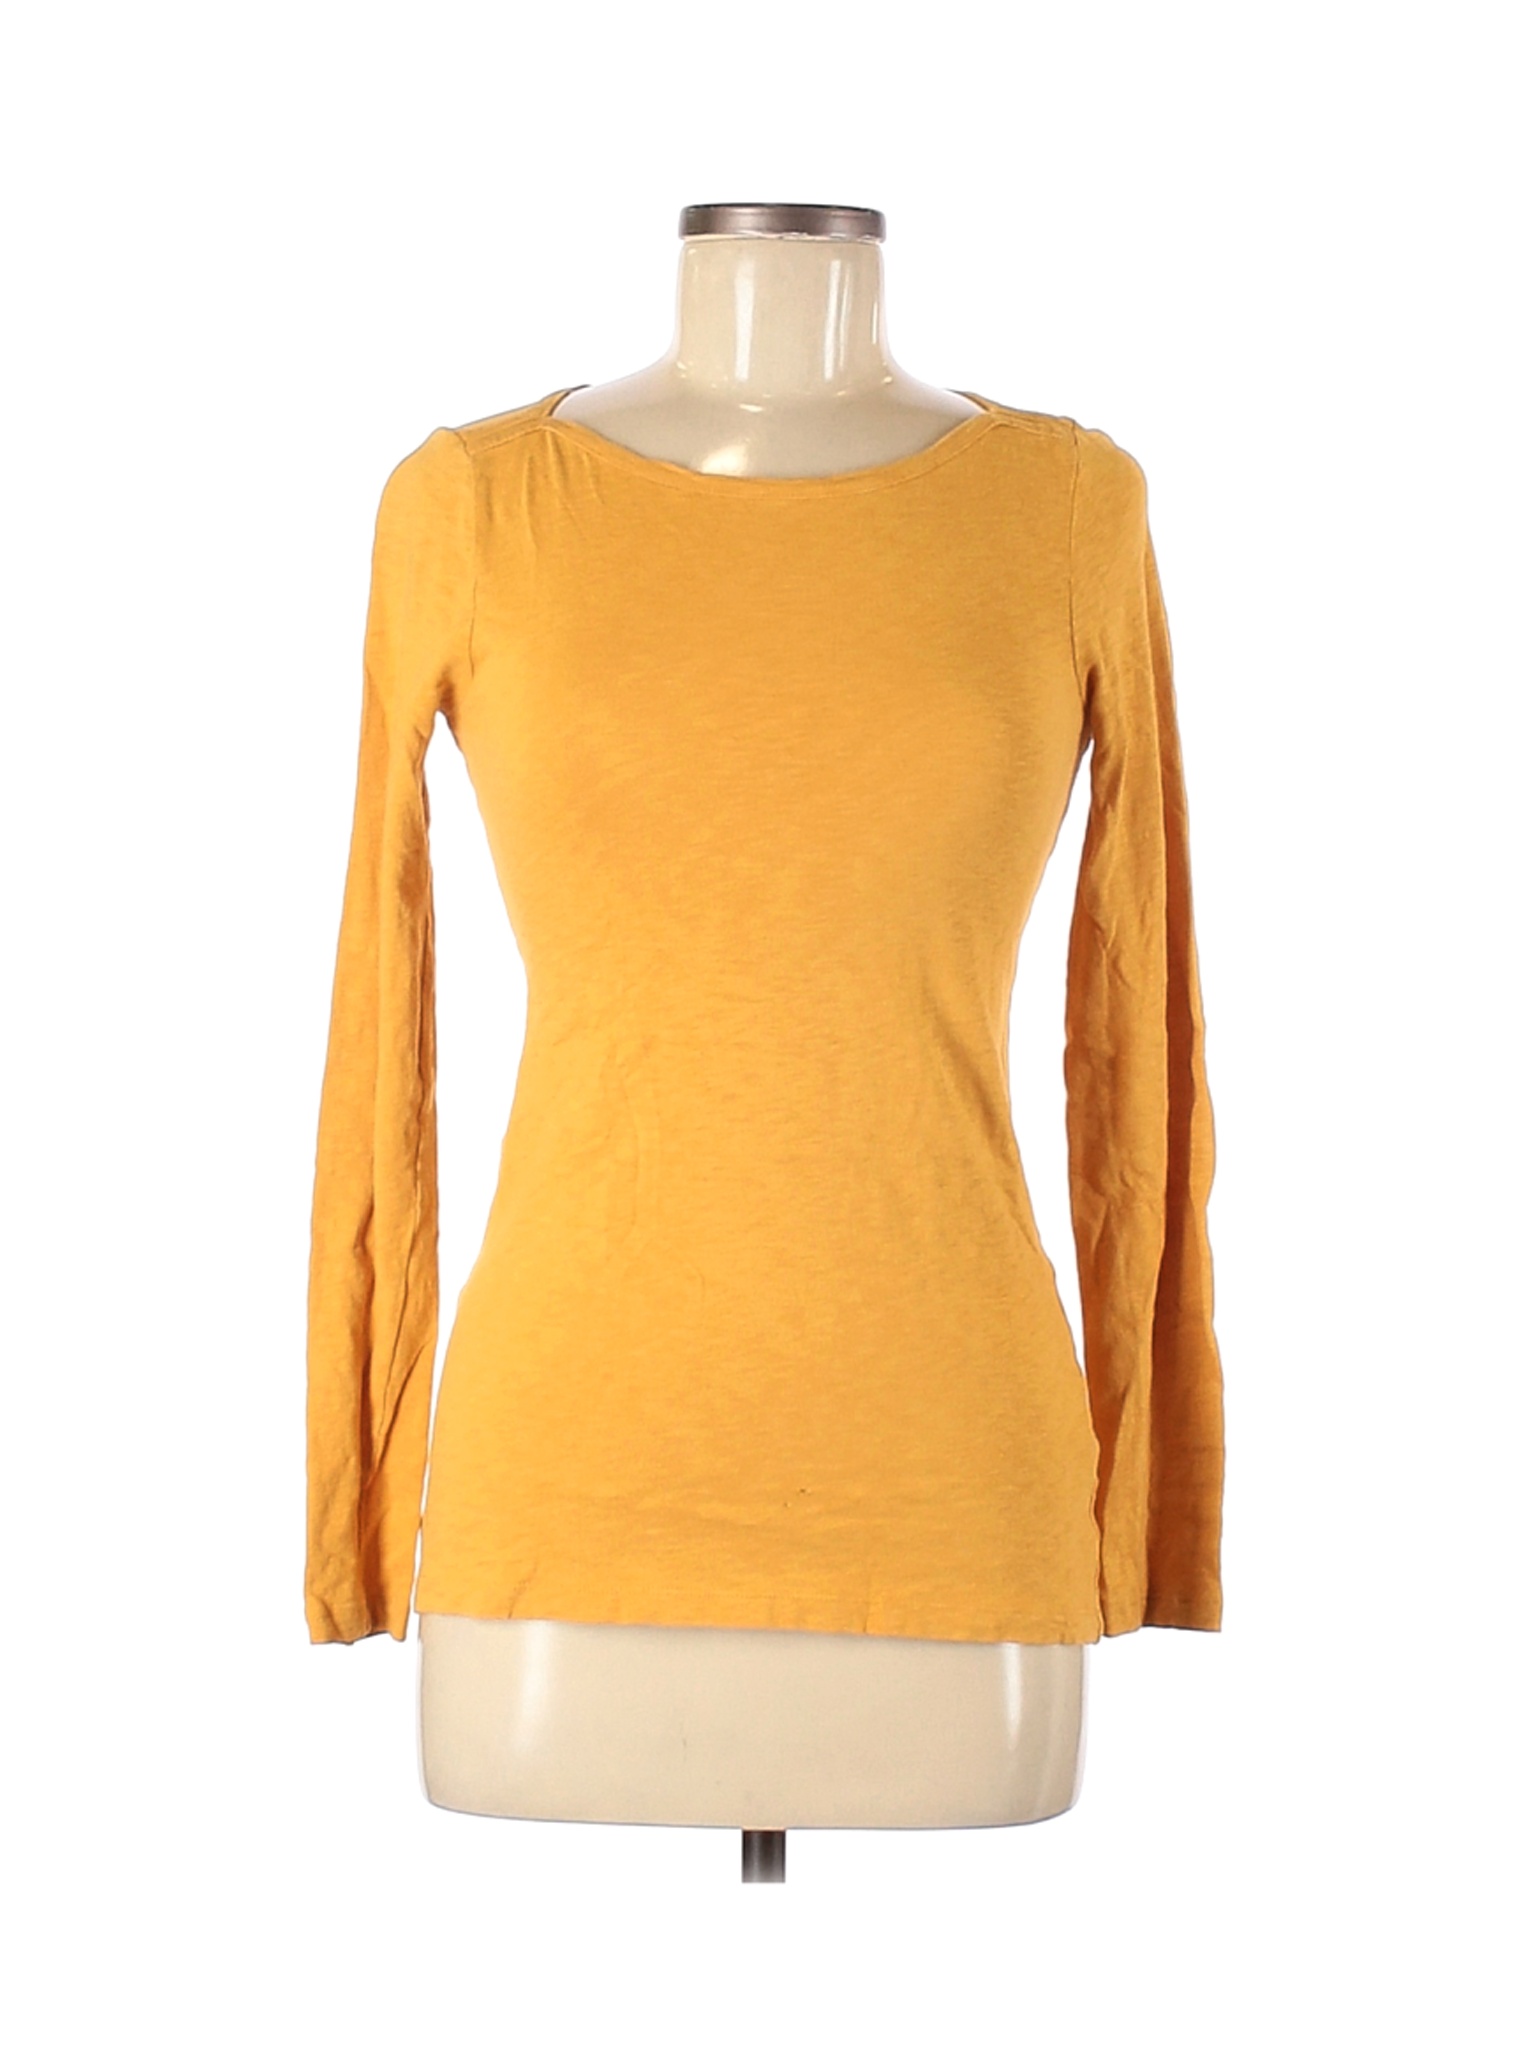 J.Crew Women Yellow Long Sleeve T-Shirt S | eBay